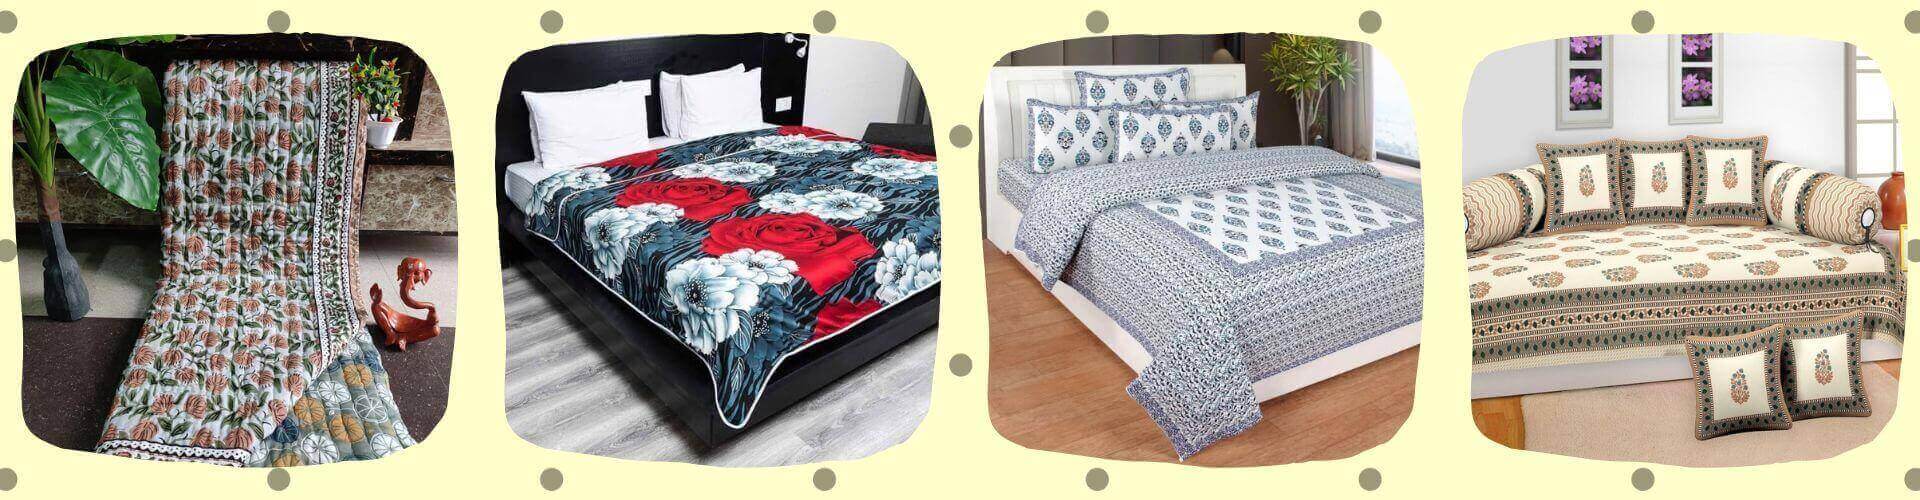 Why Jaipuri and Sanganeri Print Bedsheets are everyone's Choice